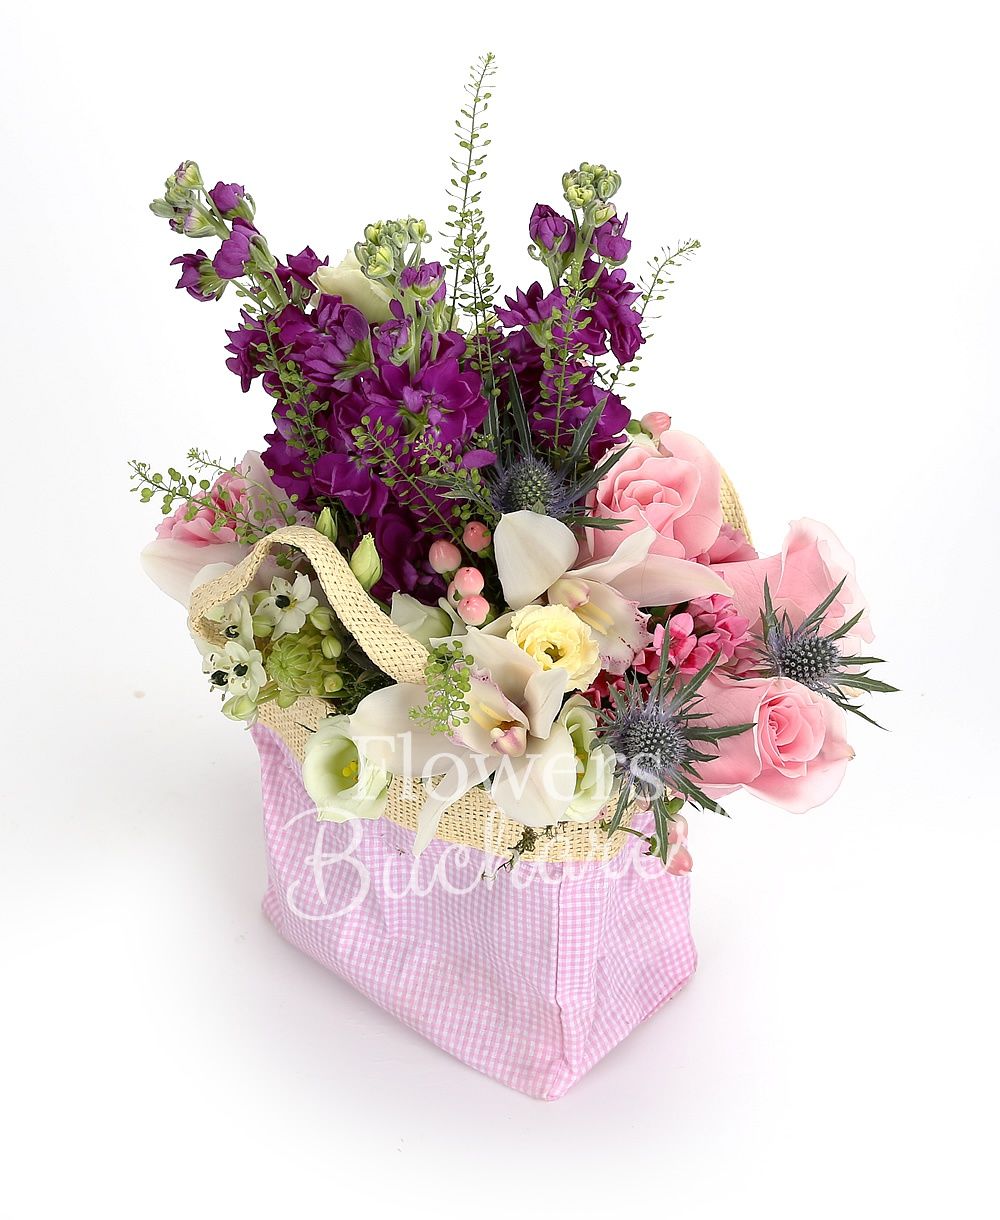 3 pink roses, 3 purple mathiolla, white cymbidium, 2 white ornithogalum, 2 pink carnations, eryngium, 2 pink hypericum, 2 pink bouvardia, white lisianthus